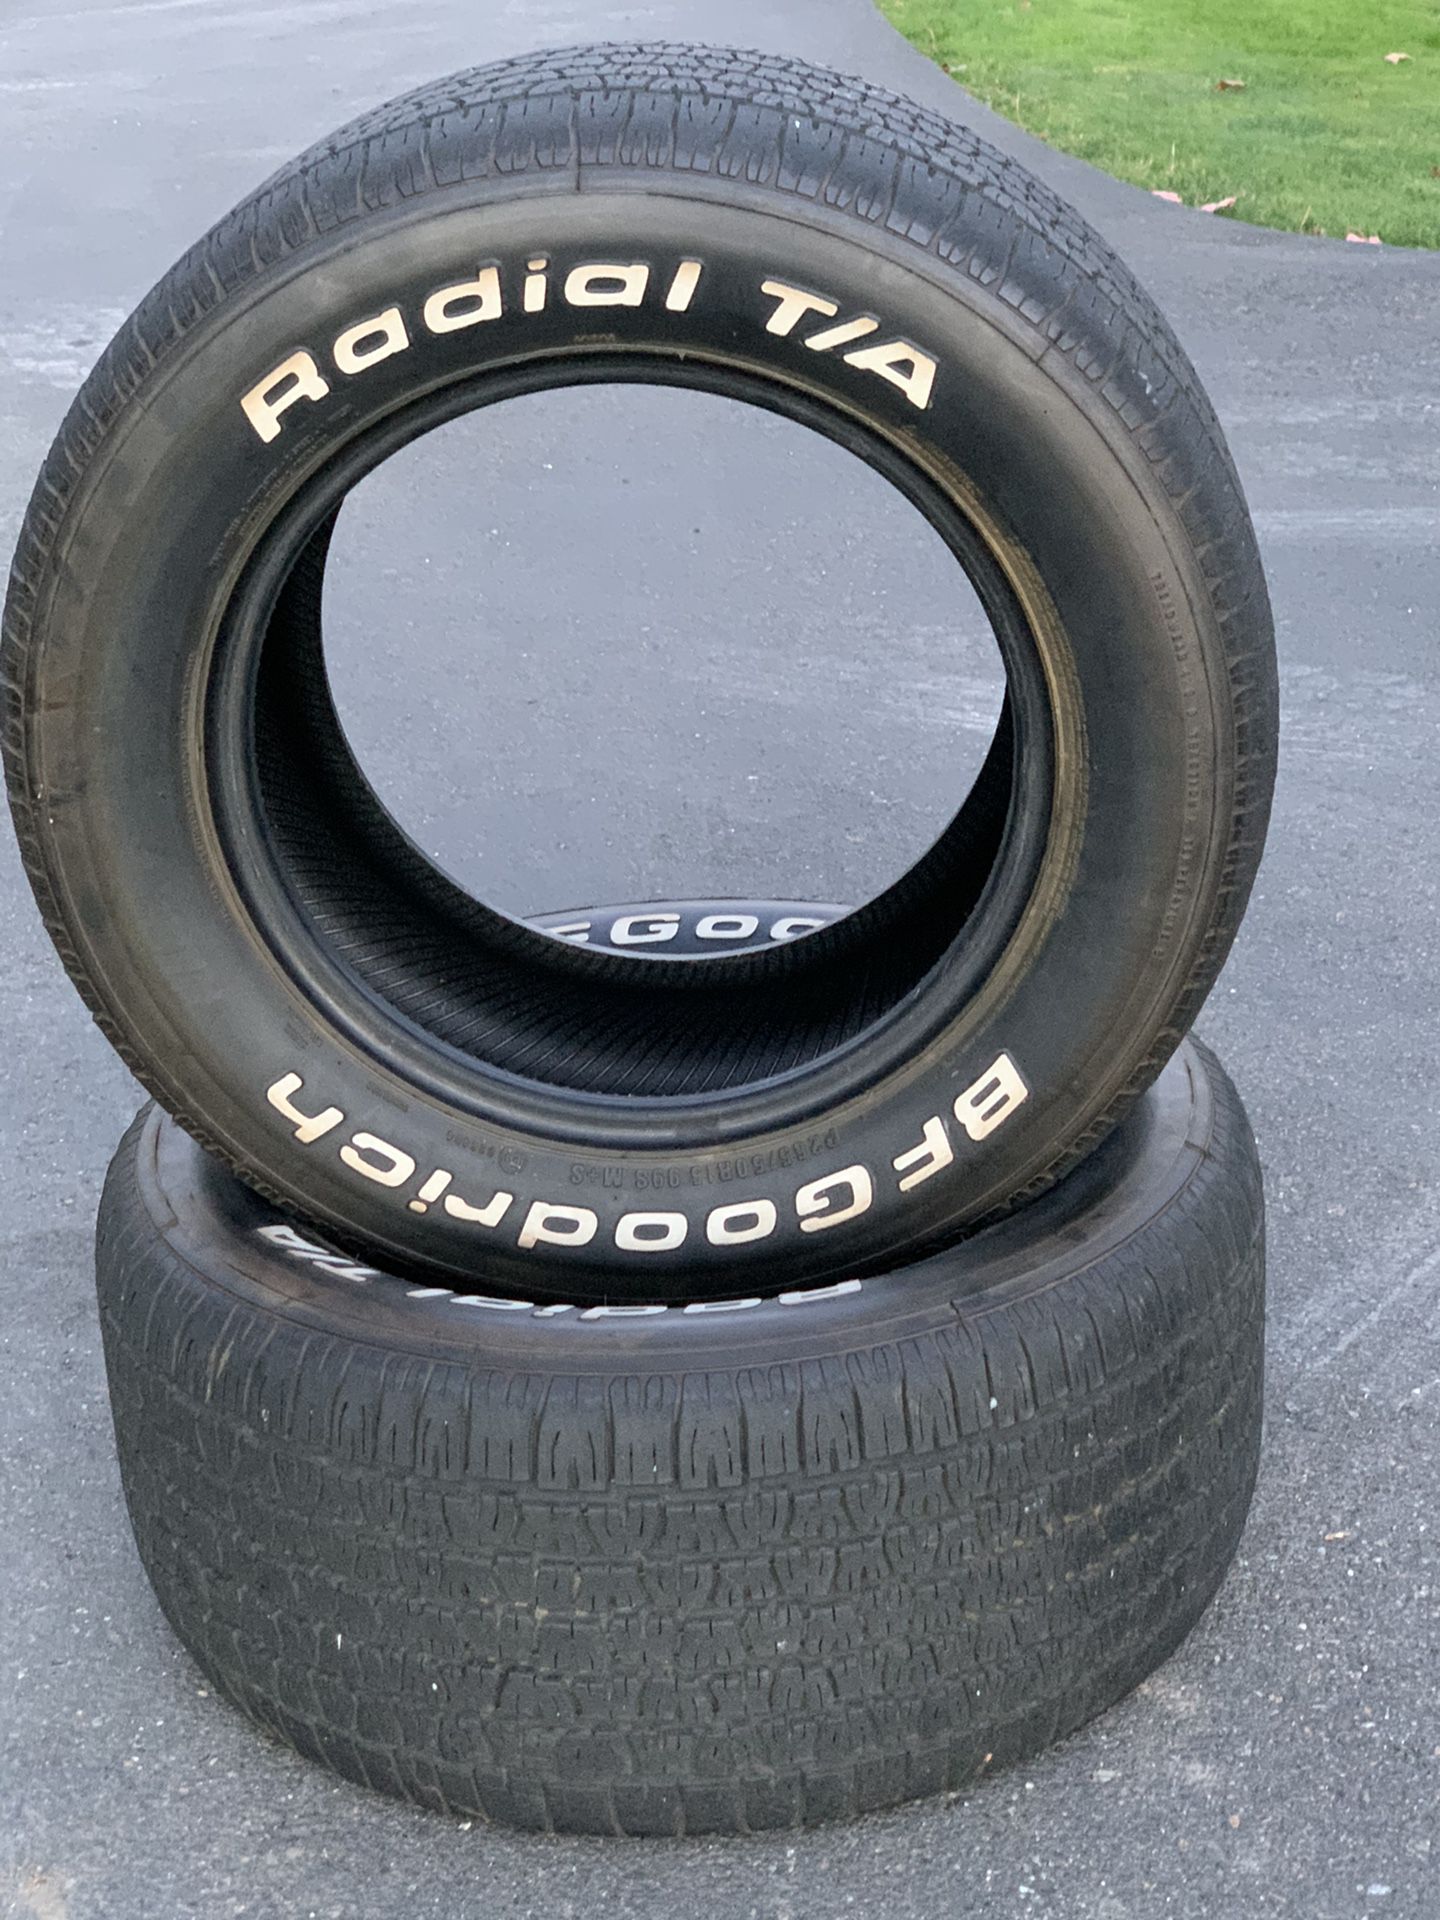 2 BFGoodrich T/A Radial Tires 15” P265/50R15